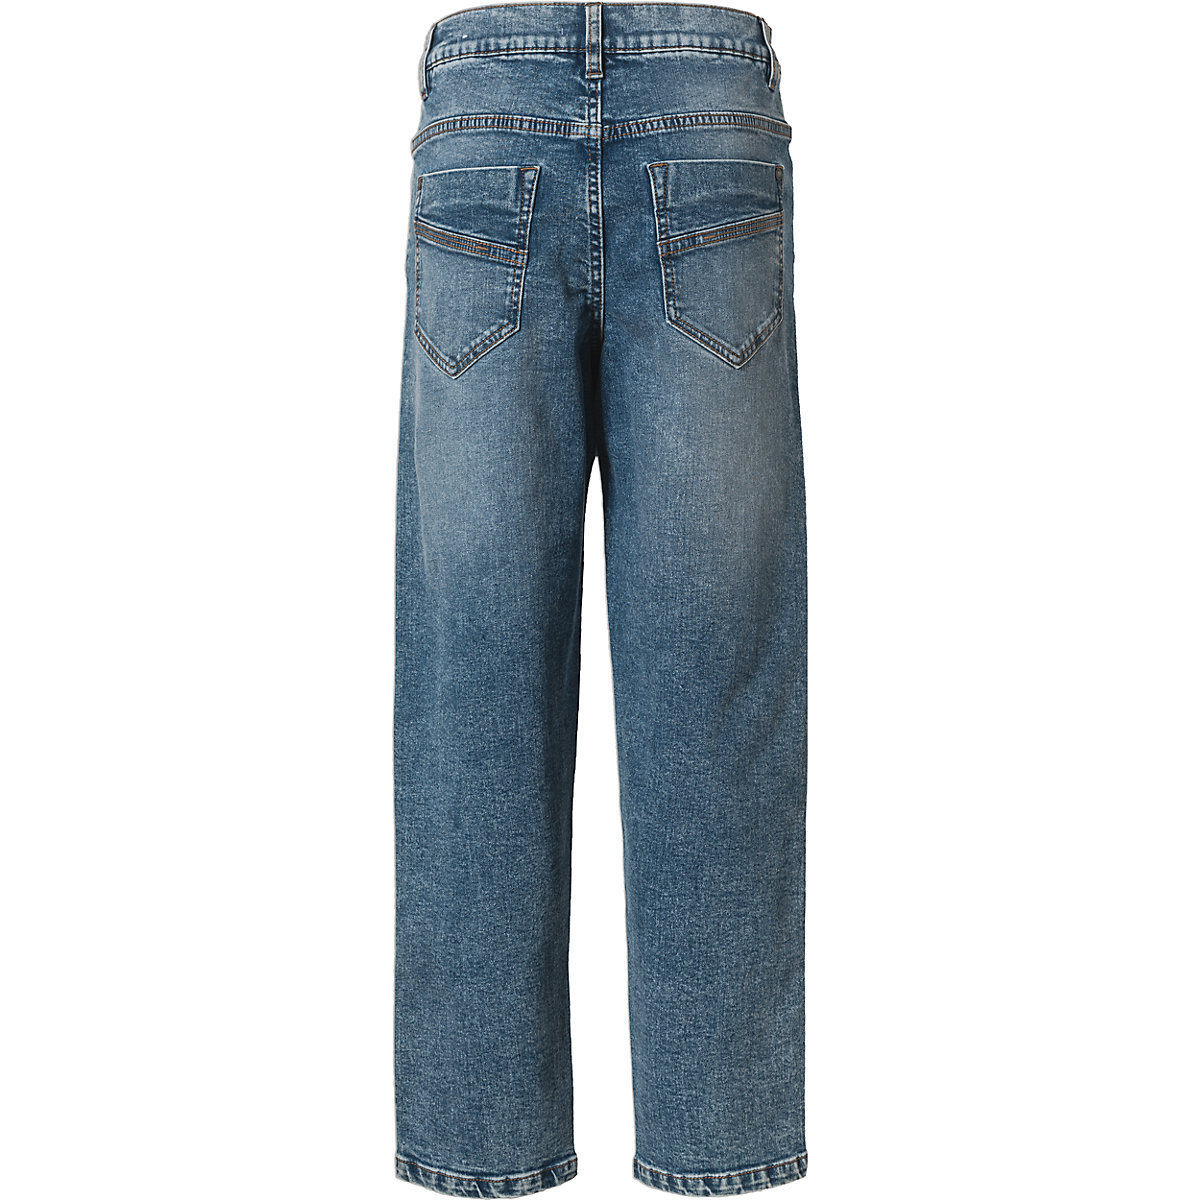 s.Oliver Jeans Dad-Fit für Jungen Passform Regular blau OR8411